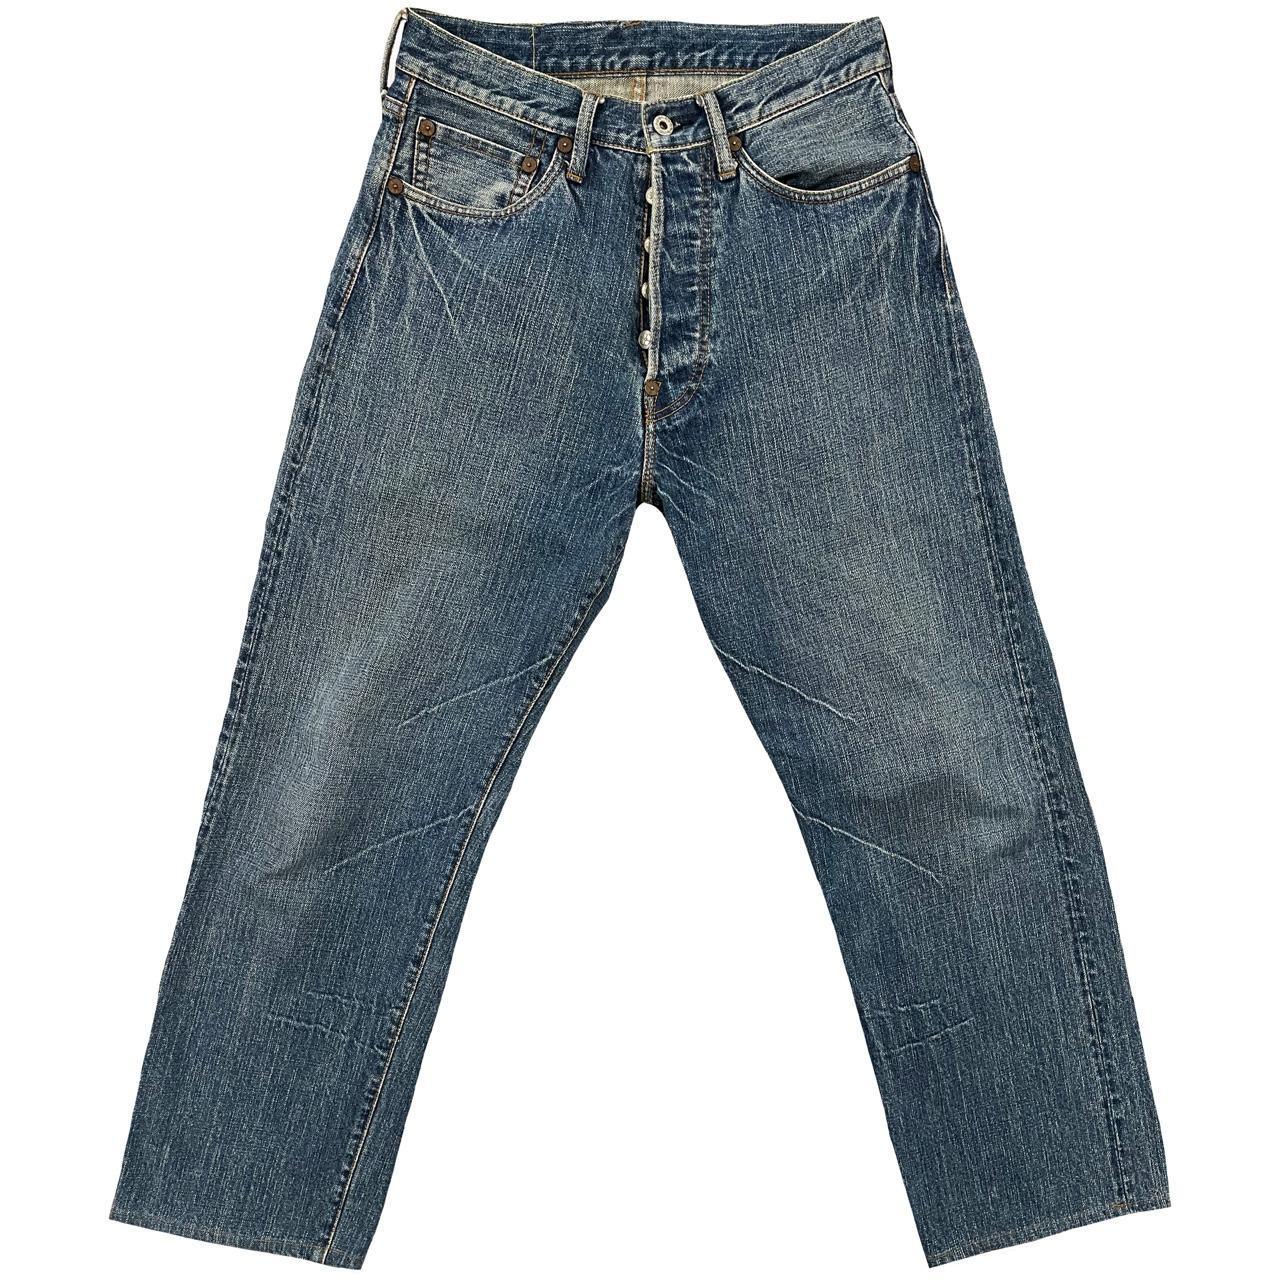 Evisu Jeans - Known Source